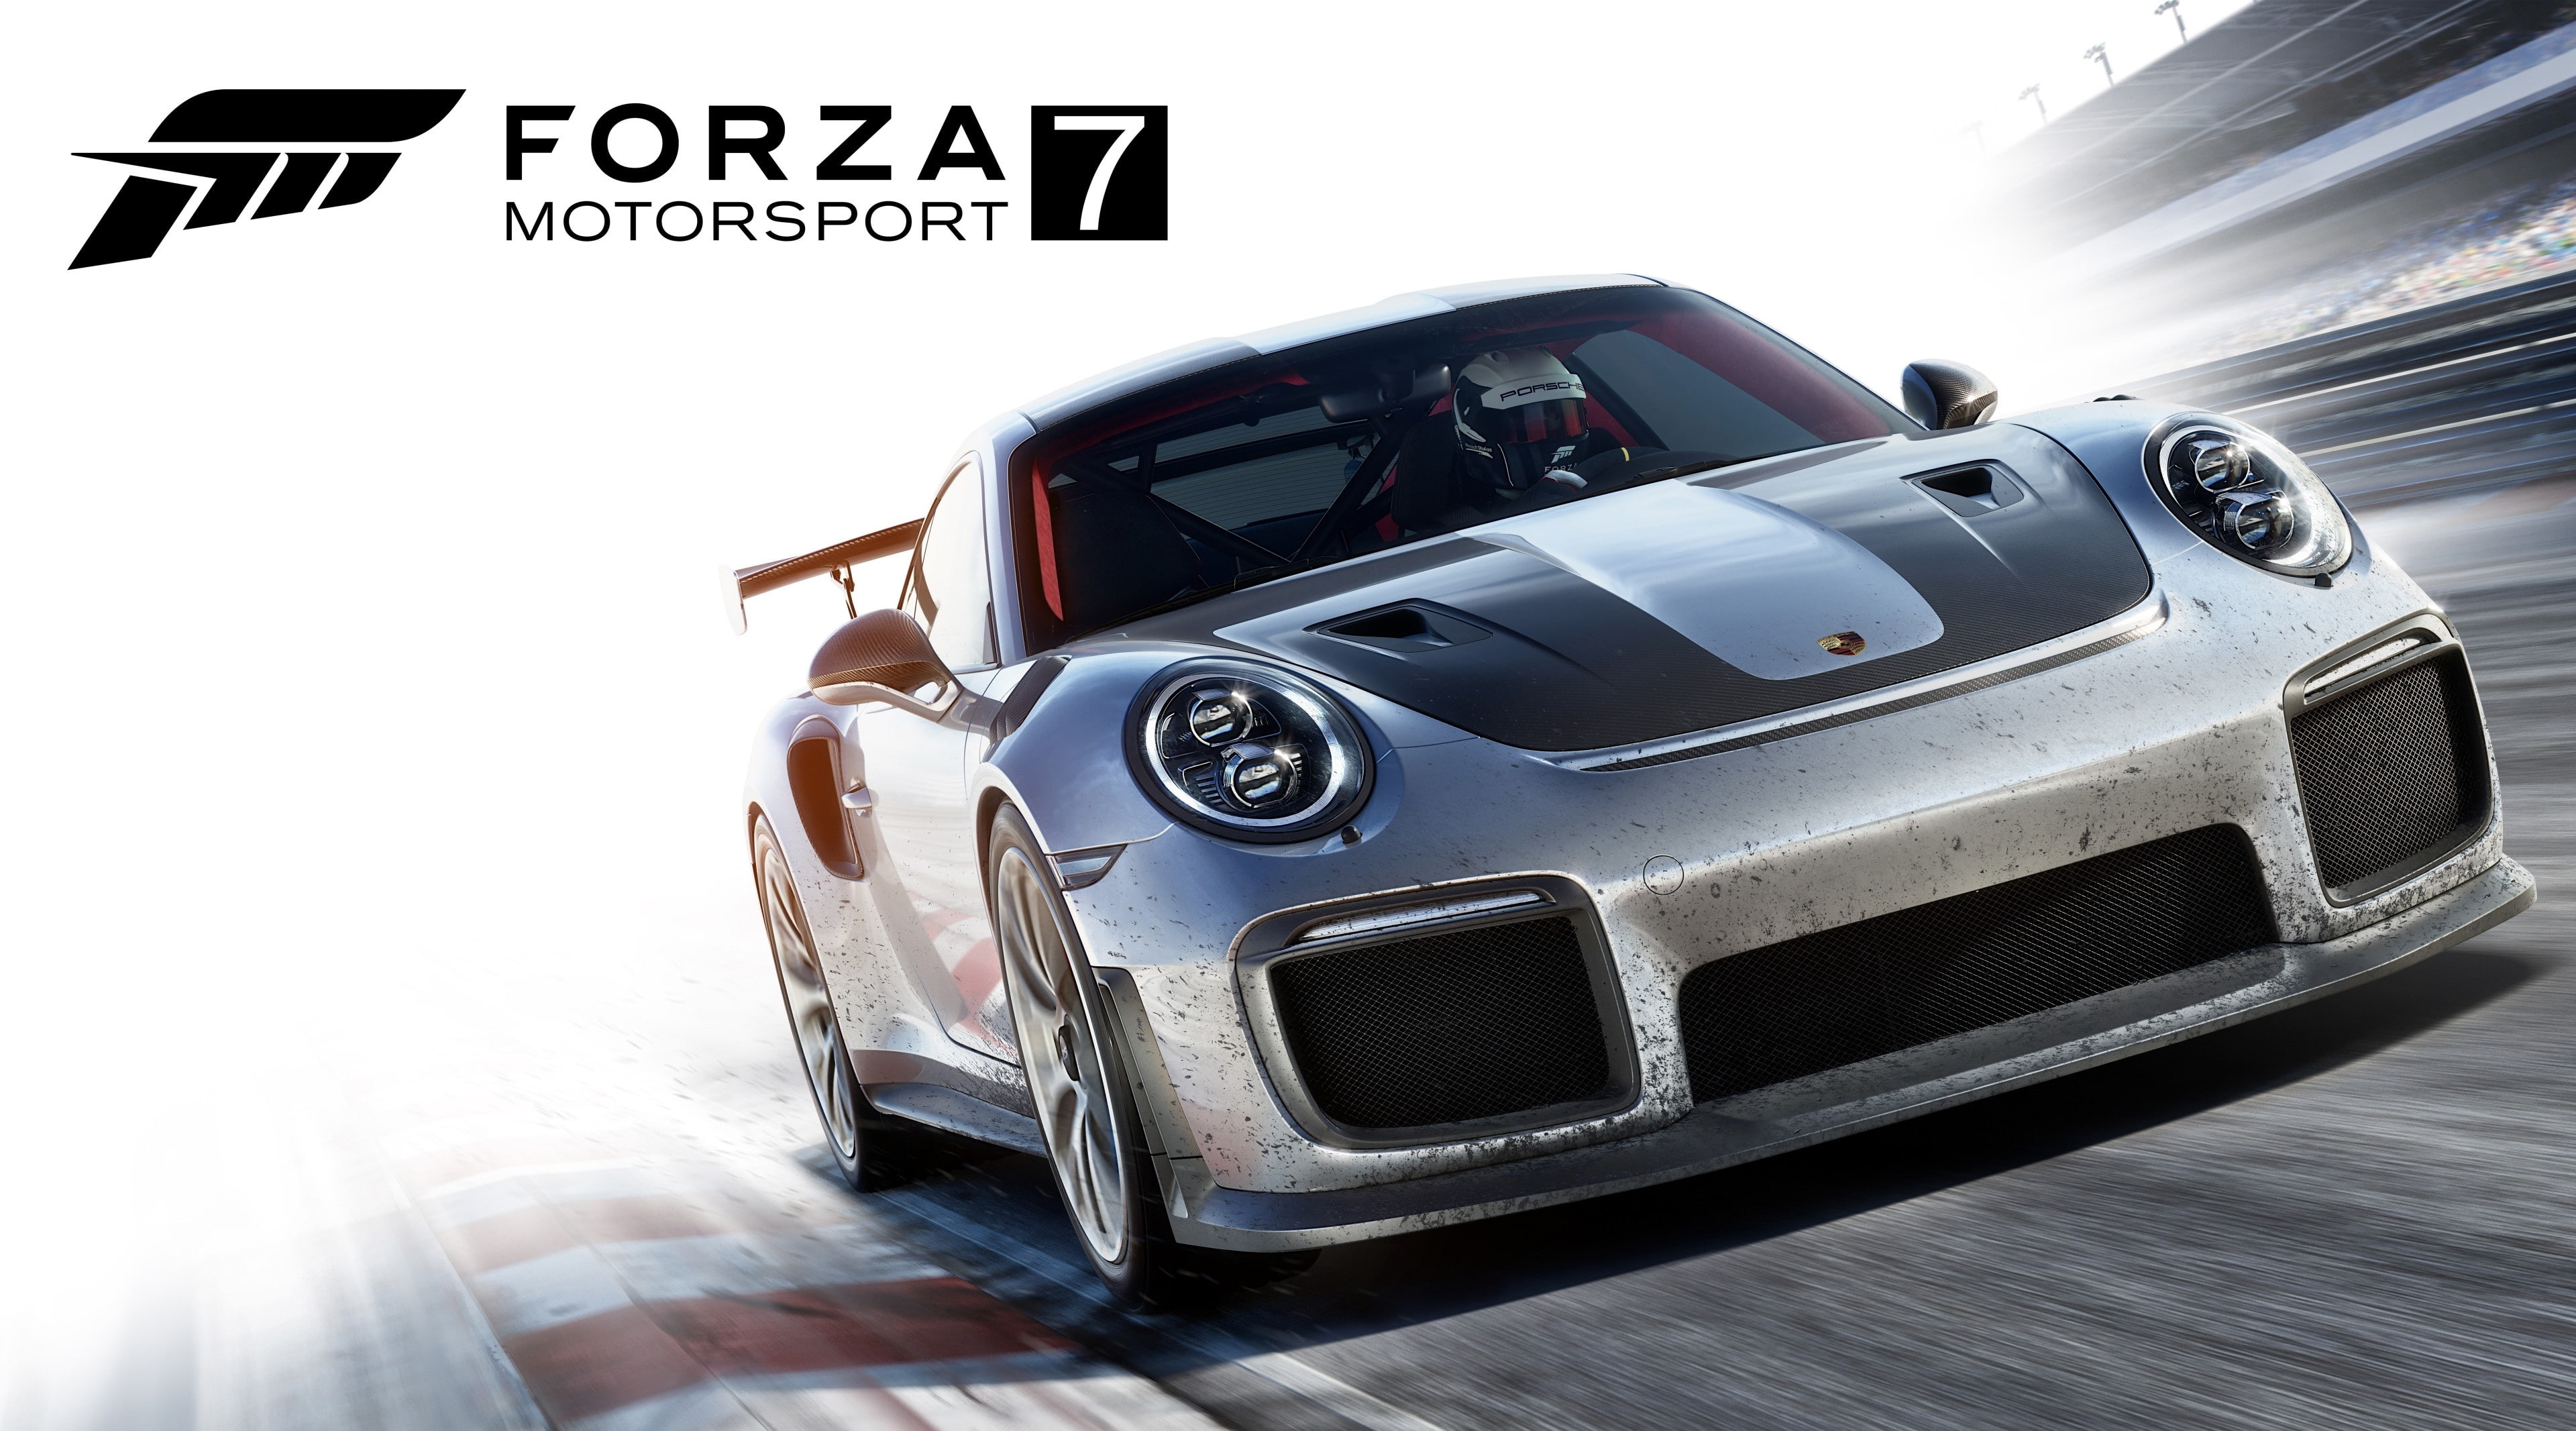 Forza Motorsport 7 Video Game 2017, gray Porsche 911 coupe Forza Motorsport 7 digital wallpaper